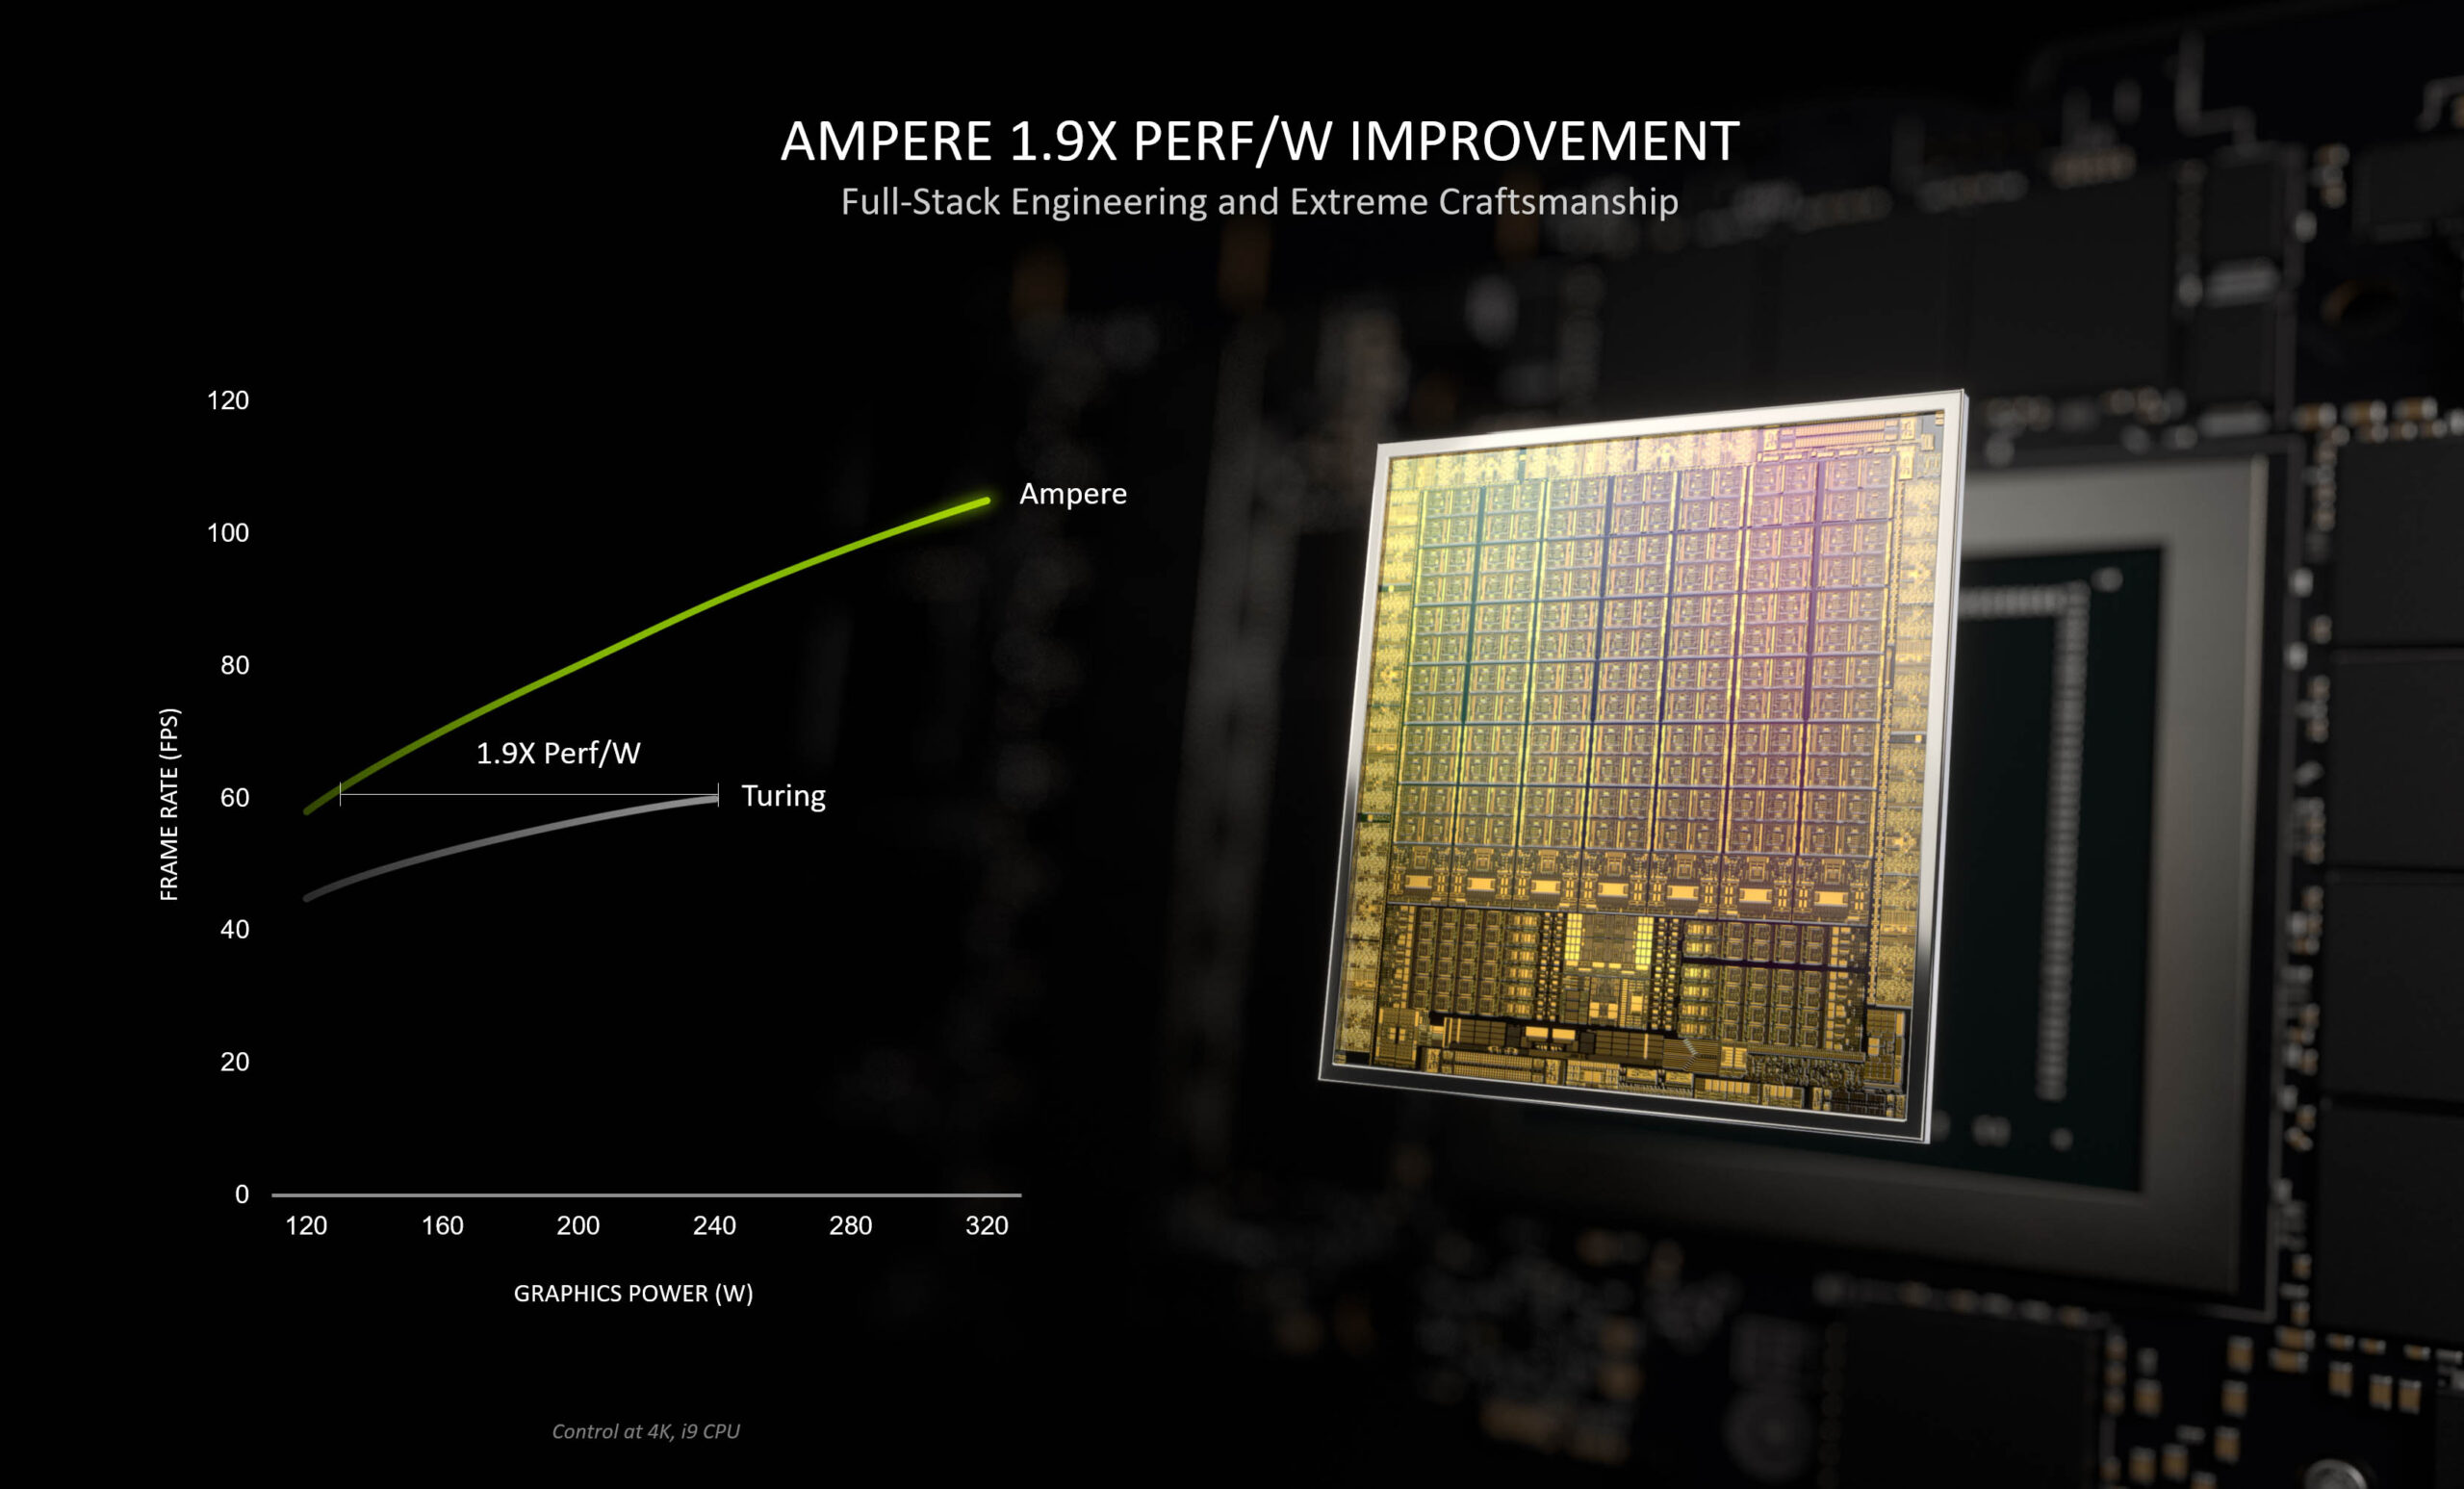 Ampere vs turing GPU performance per watt comparison